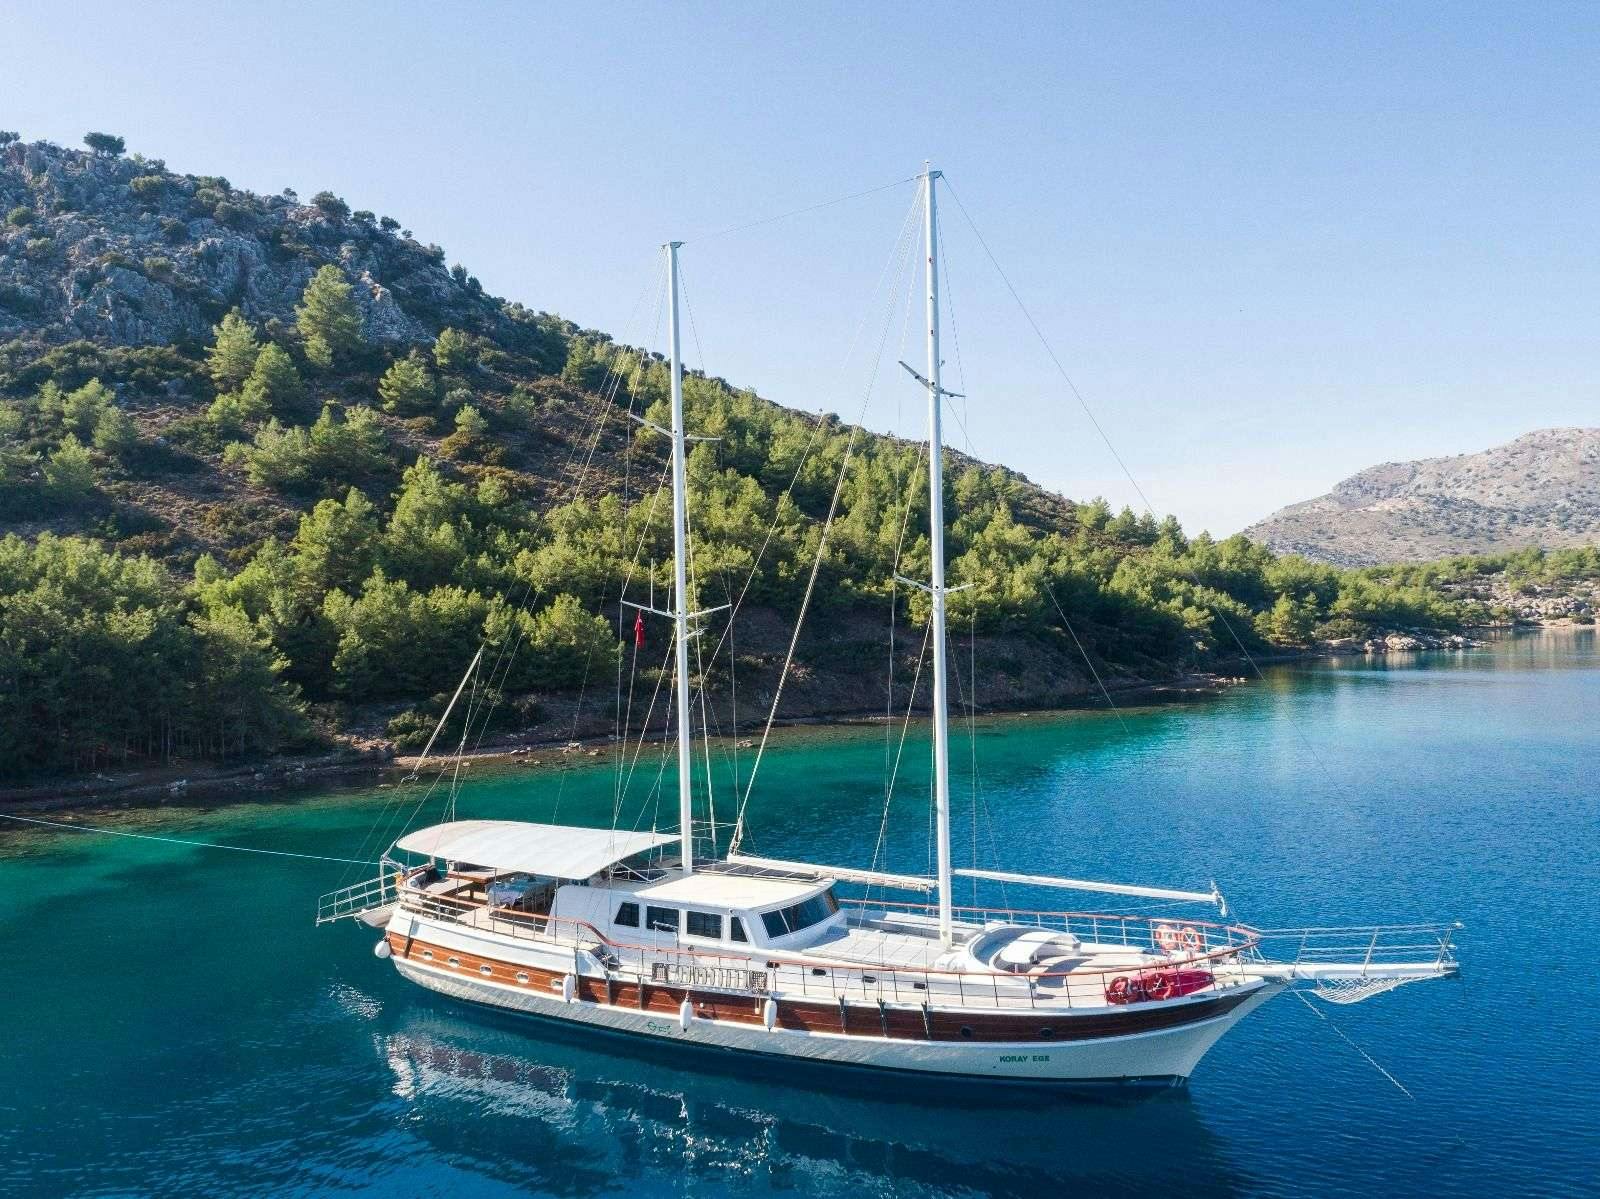 koray ege - Yacht Charter Marmaris & Boat hire in Greece & Turkey 1